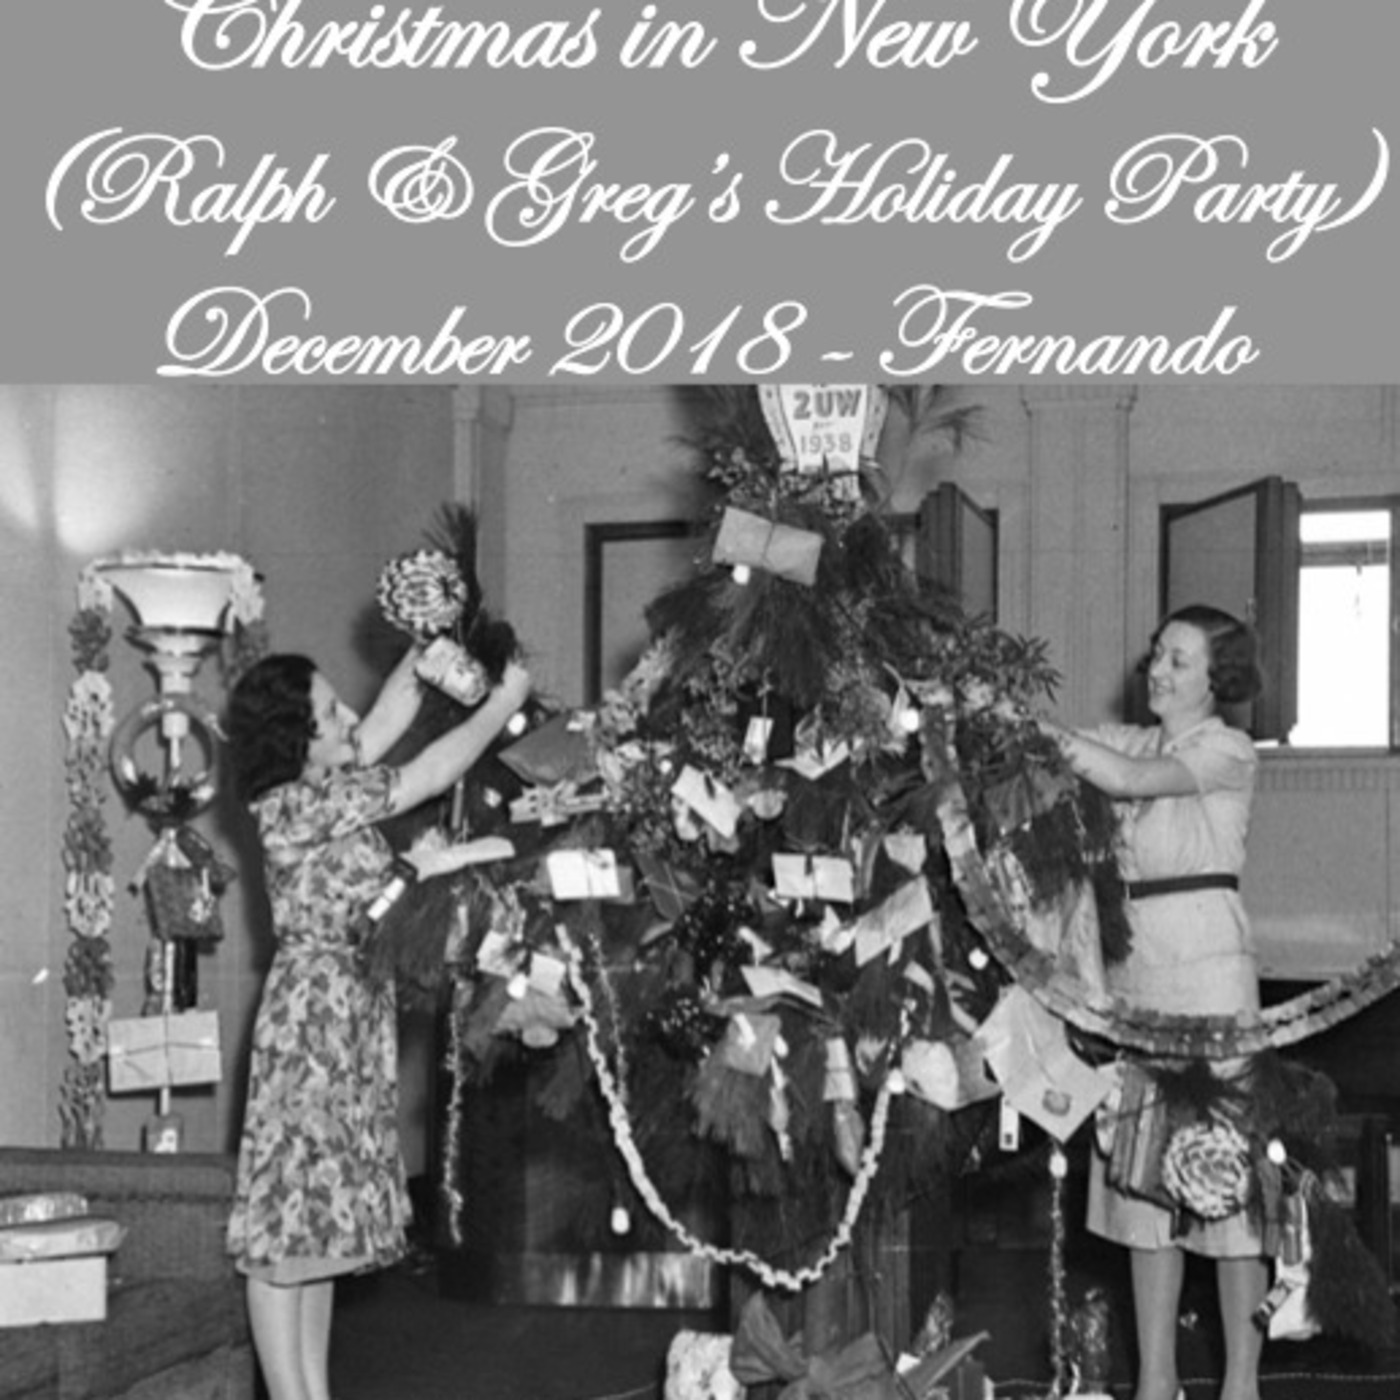 Fernando - Christmas In New York (Ralph & Greg’s Party) - December 2018